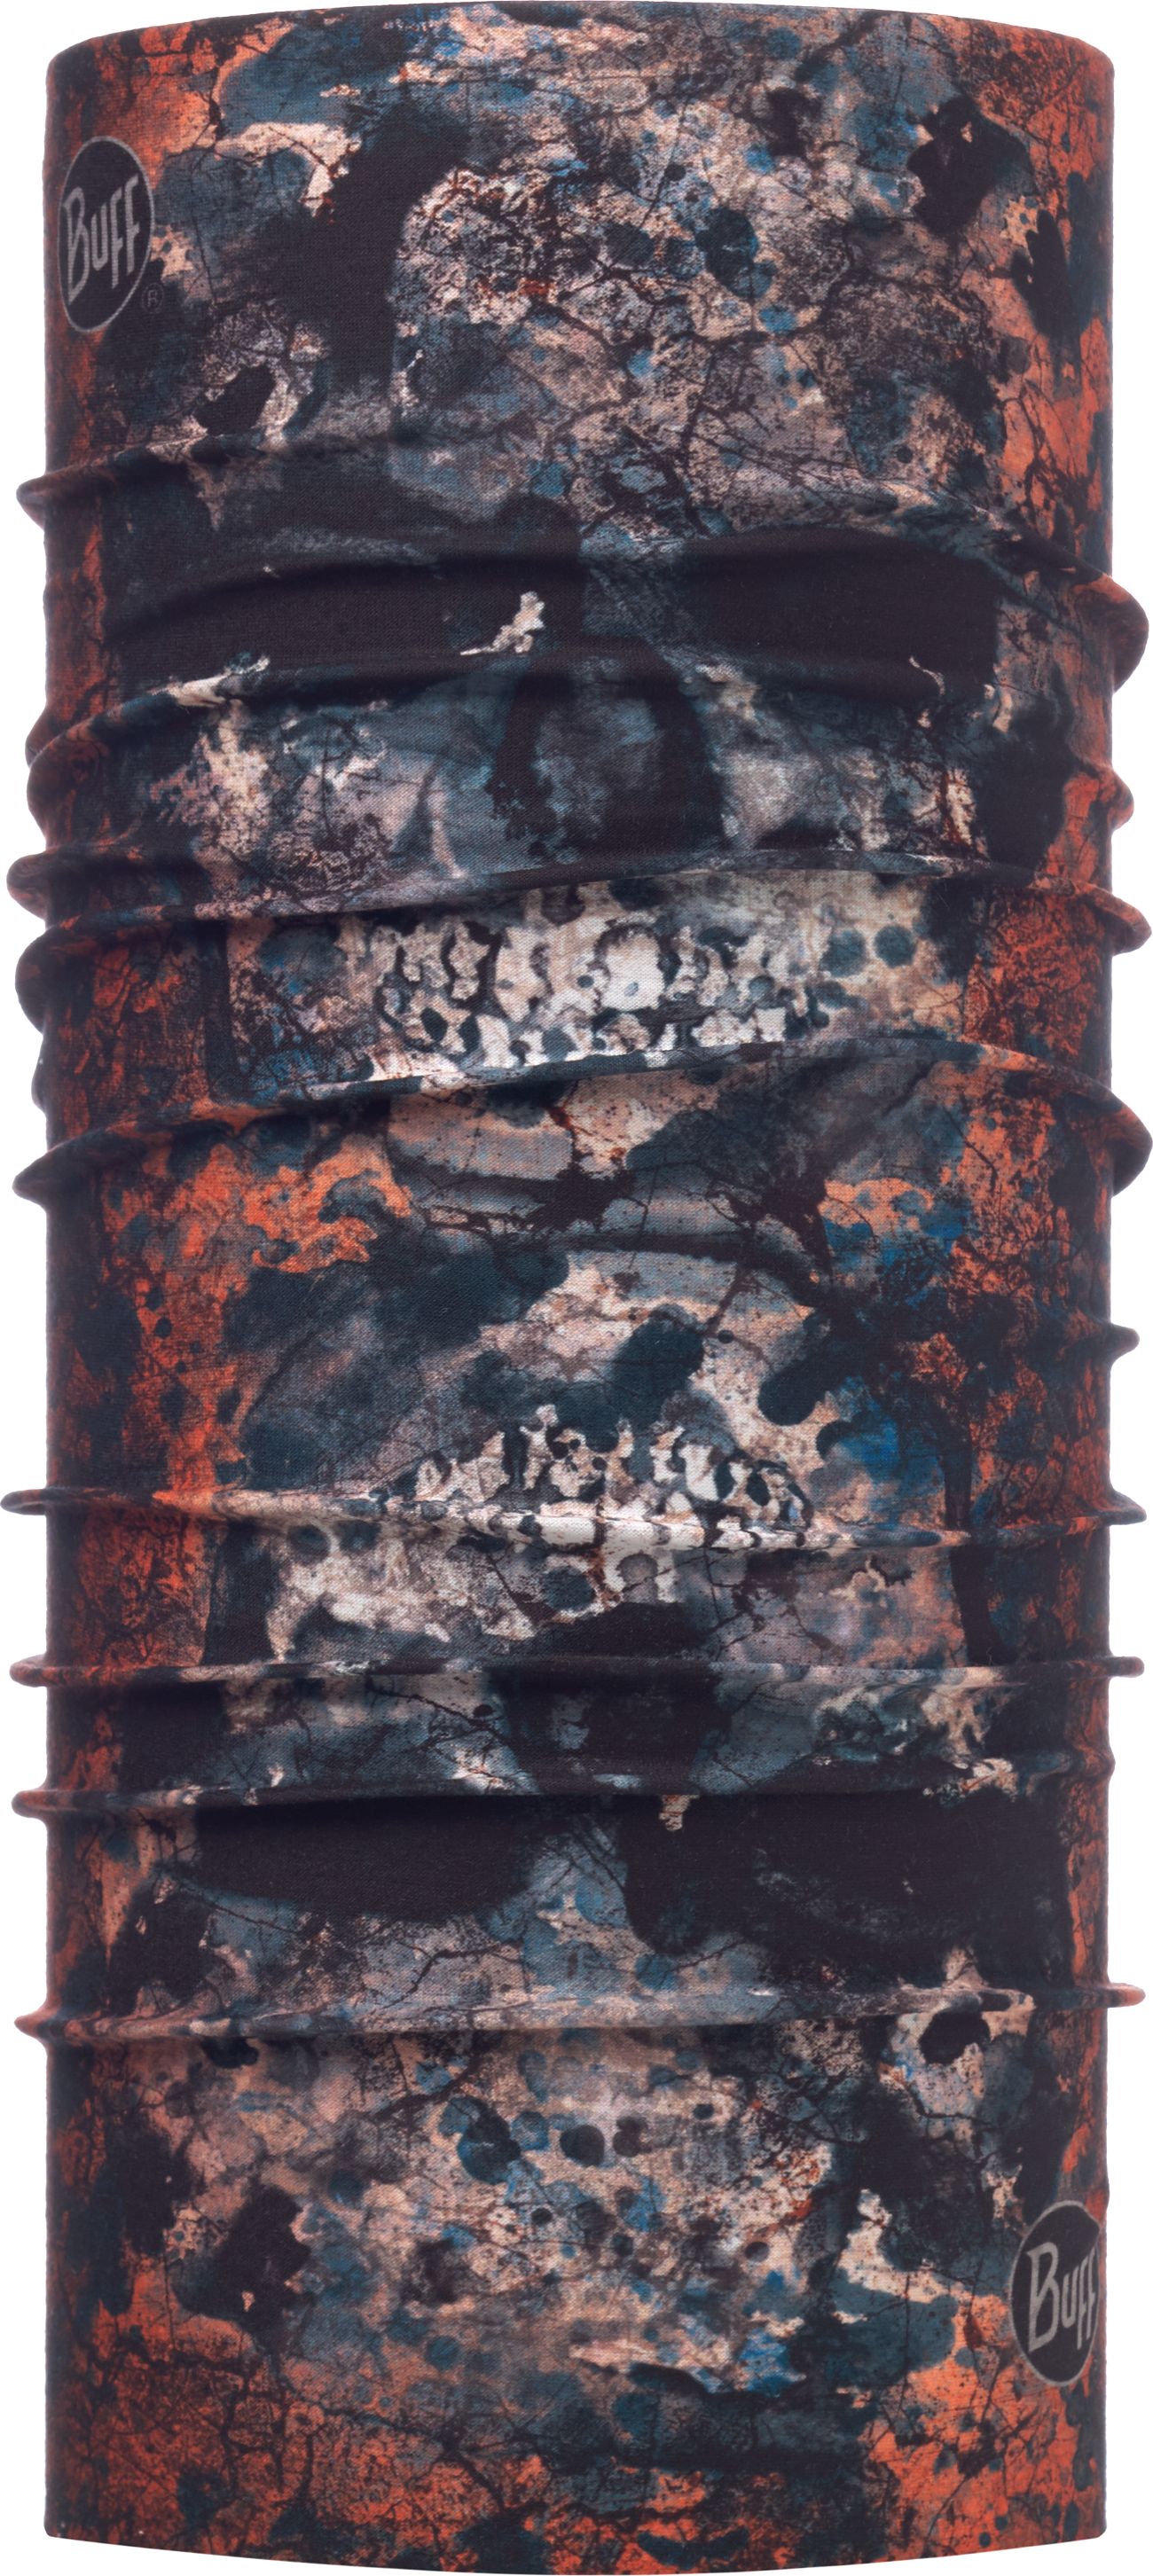 Бандана Buff UV Protection Skull Mud Copper, цвет: темно-коричневый. 117033.333.10.00. Размер универсальный